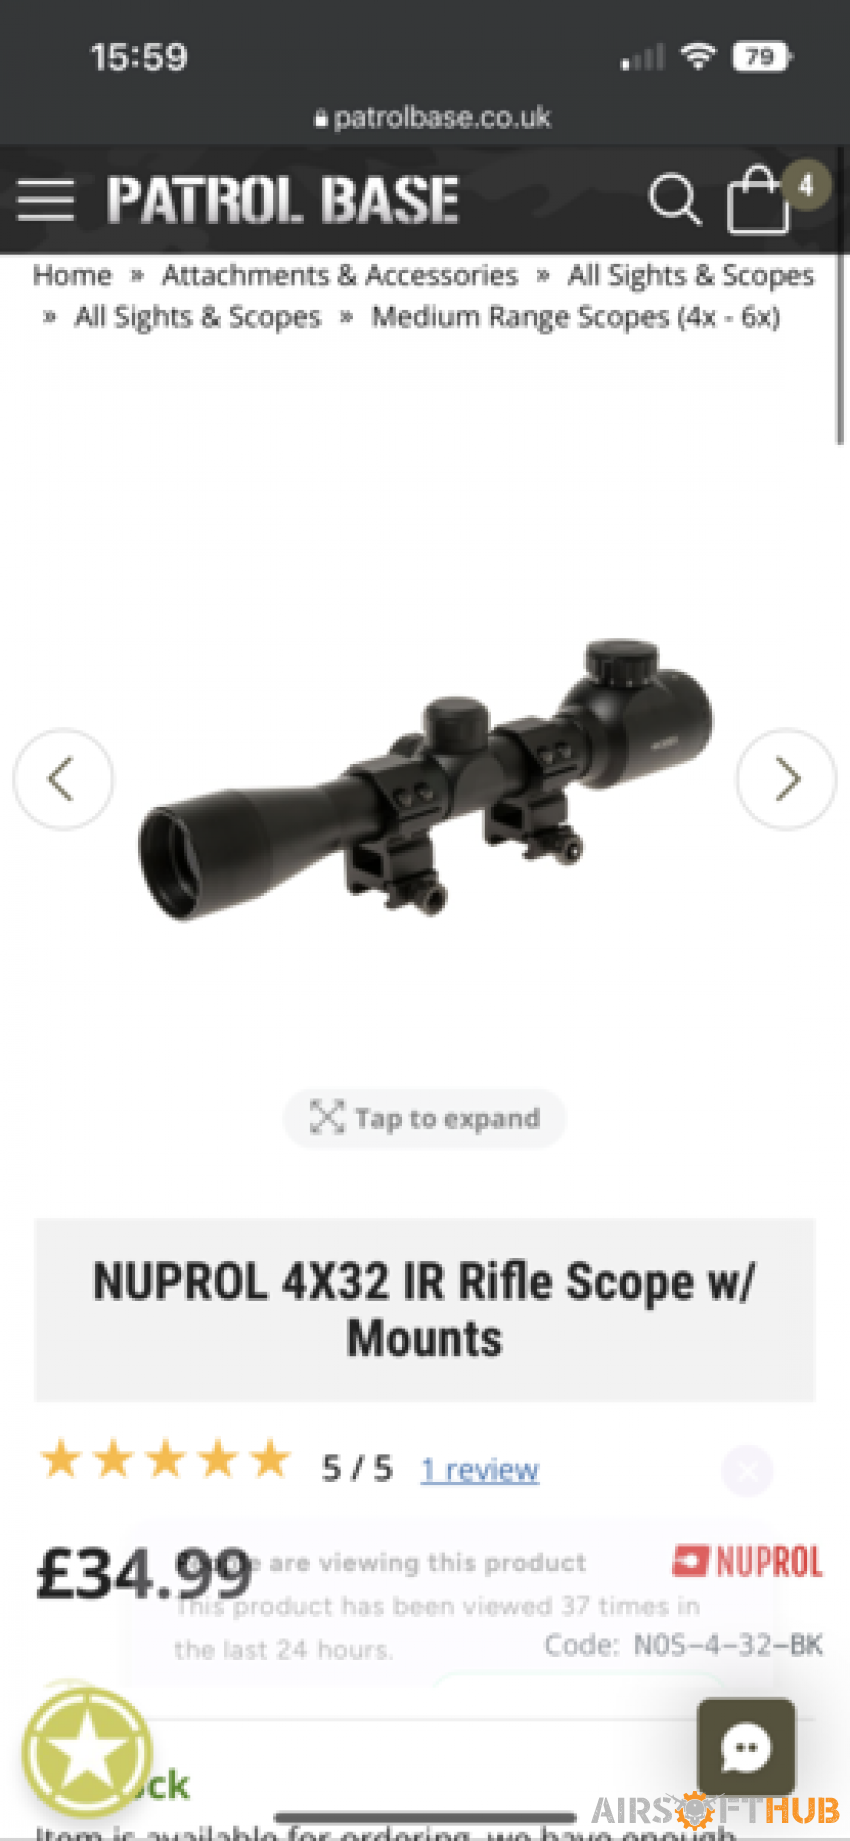 NUPROL 4X32 IR Rifle Scope - Used airsoft equipment